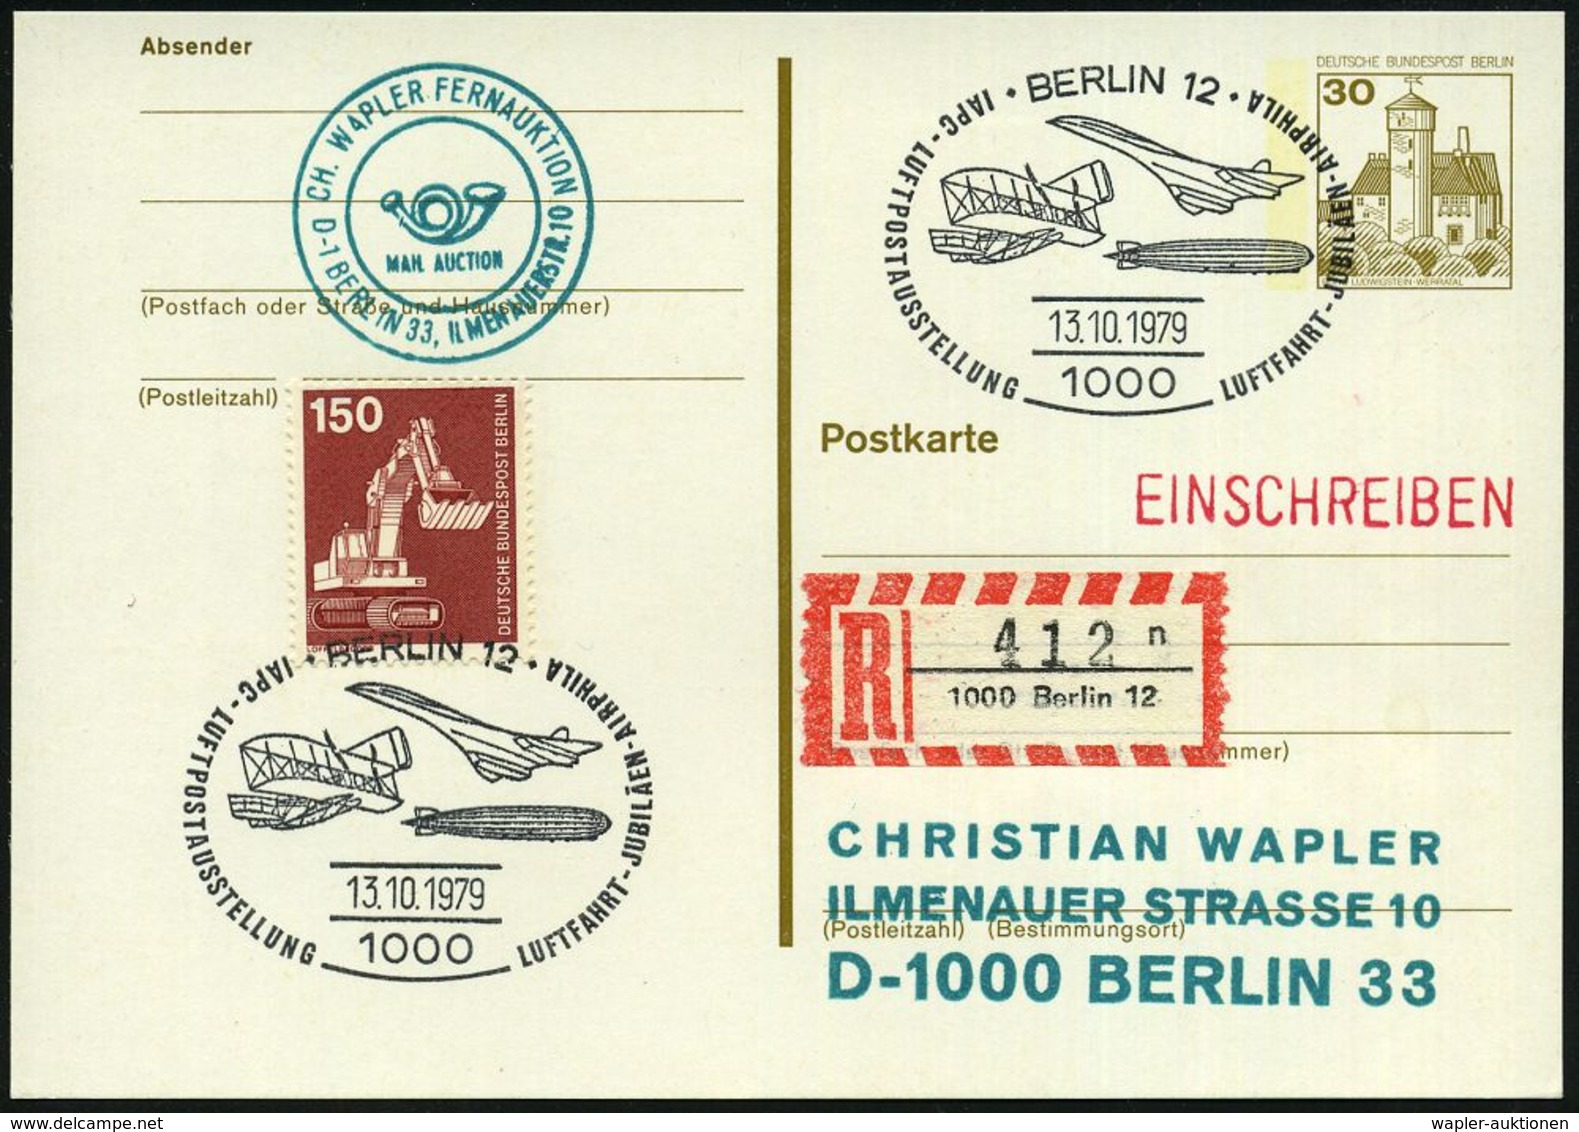 1000 BERLIN 12/ IAPC-LUFTPOSTAUSSTELLUNG 1979 (13.10.) SSt = Concorde (u. Zeppelin, Wright-Flugz.) 2x + RZ: 1000 Berlin  - Concorde